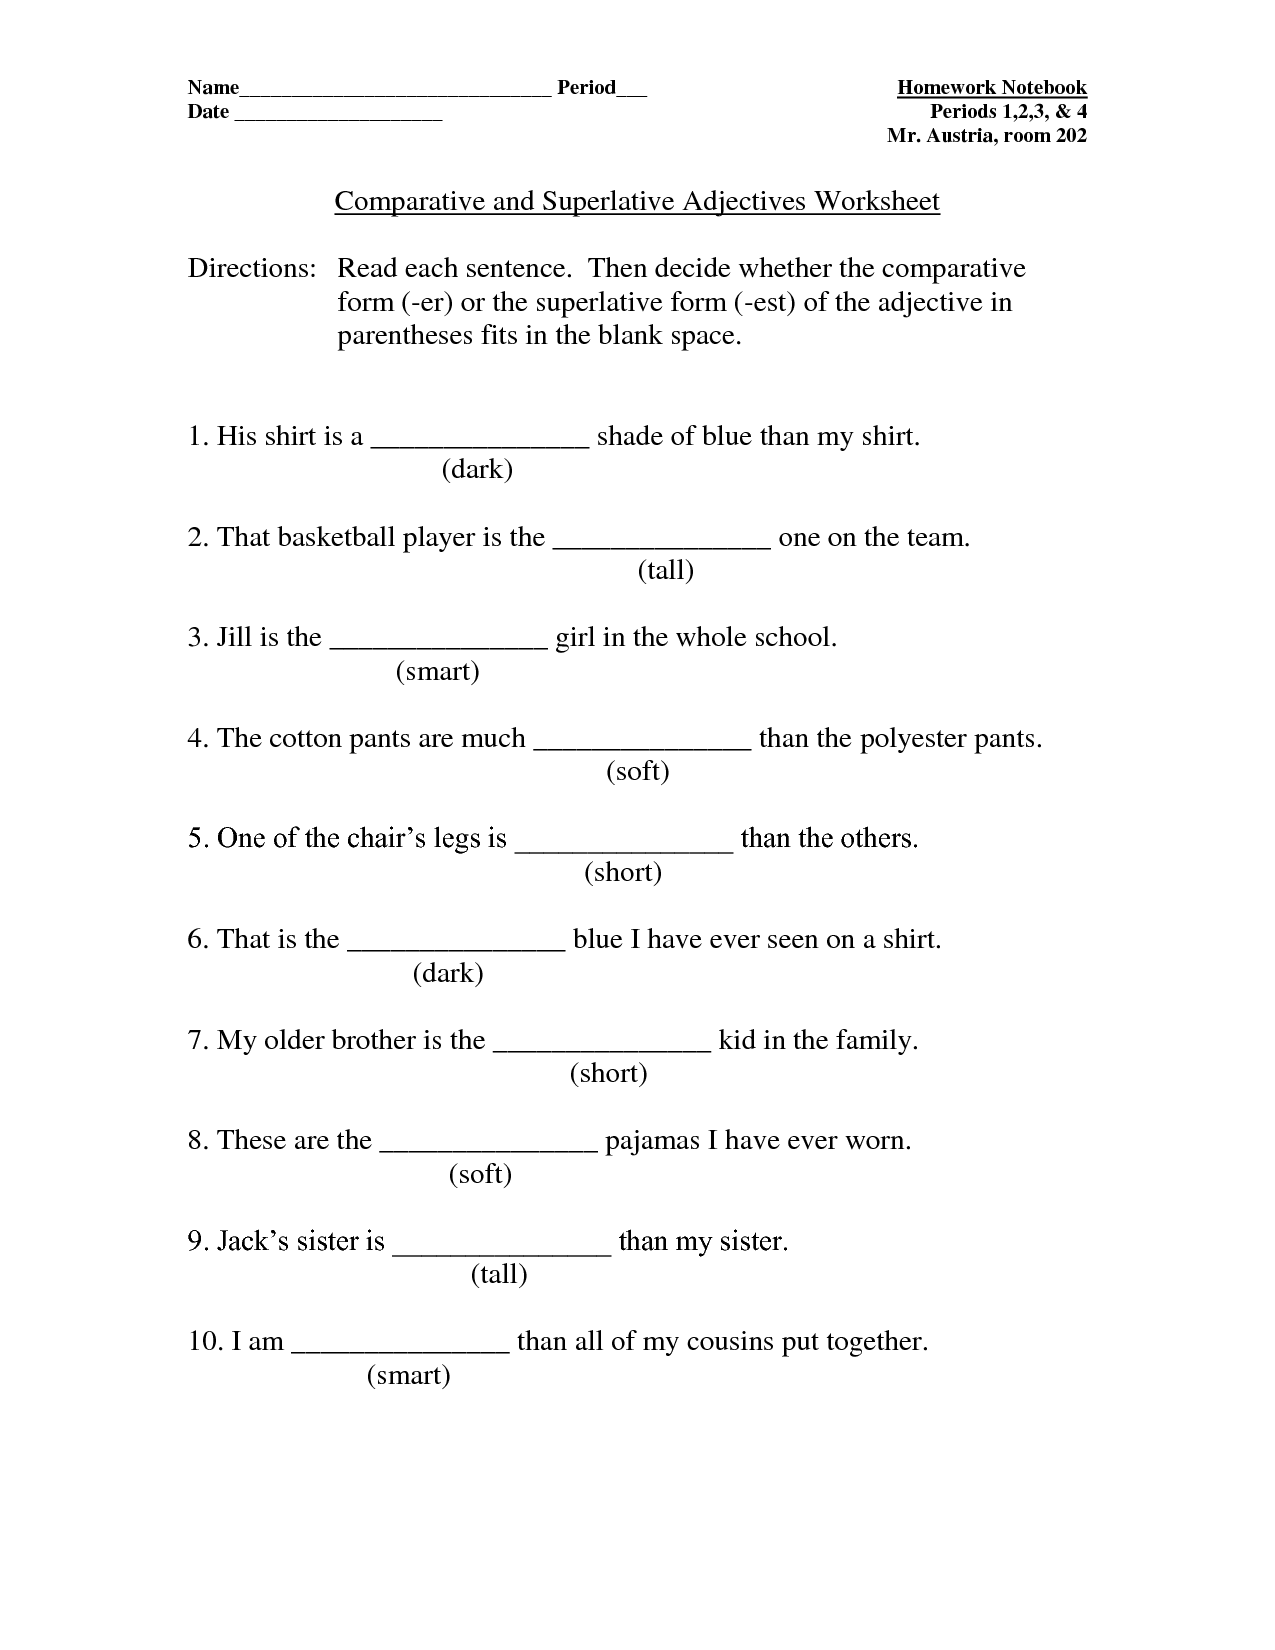 demonstrative-adjectives-spanish-worksheet